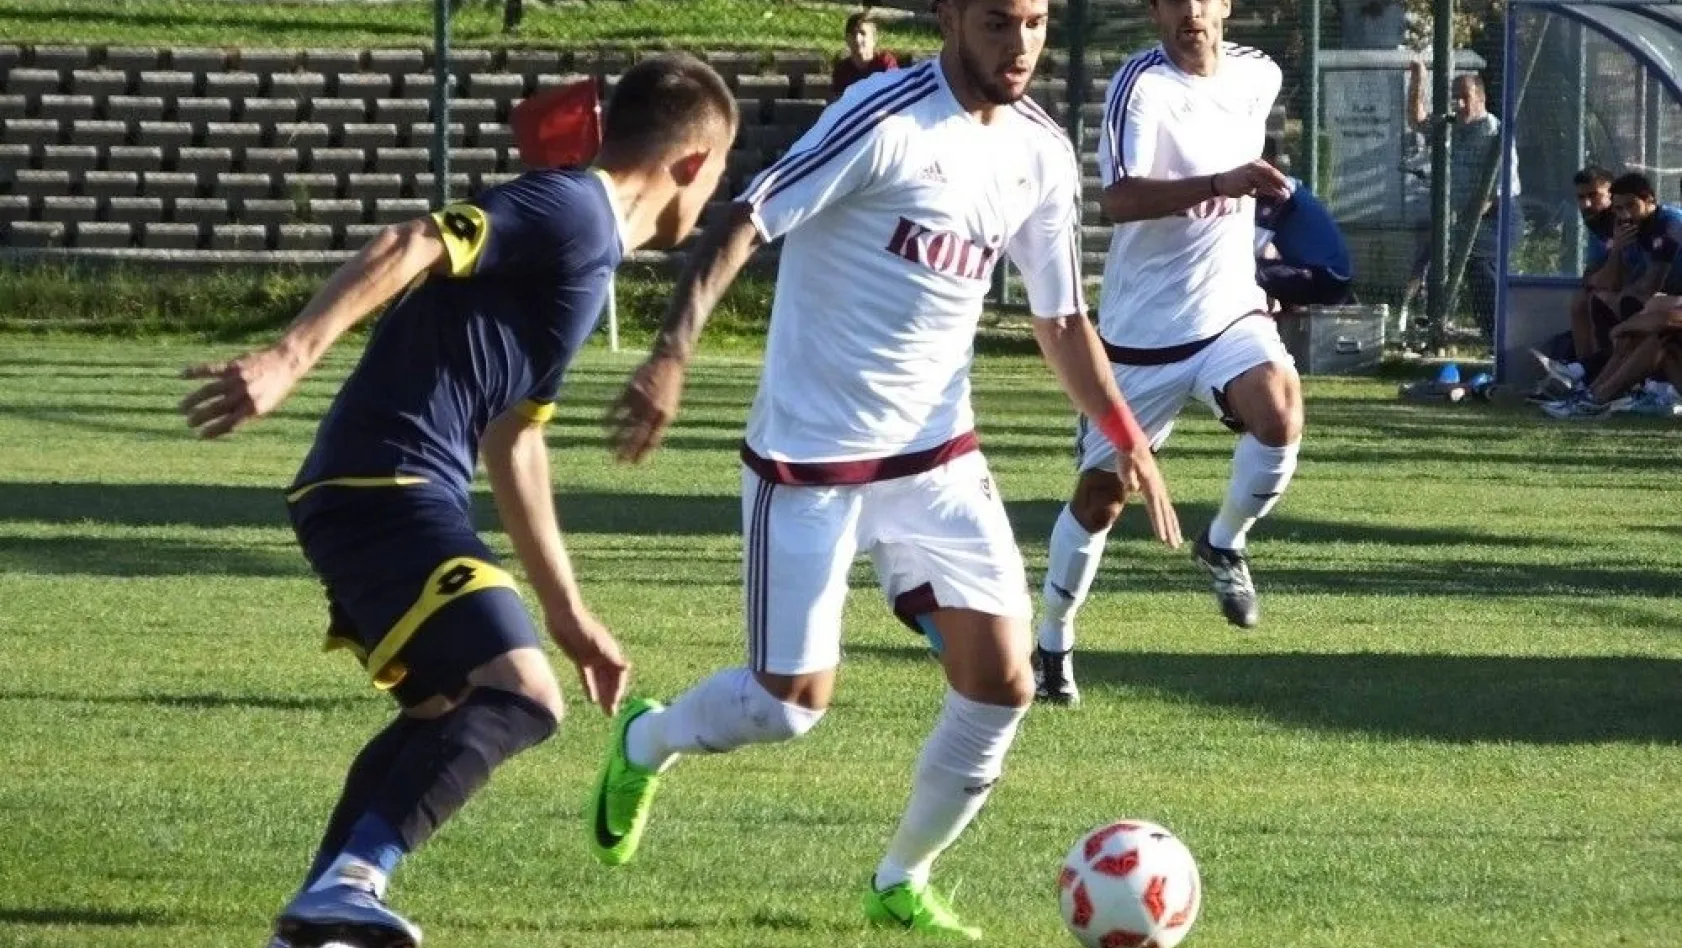 Elazığspor'un son hazırlık maçı Şanlıurfaspor'la